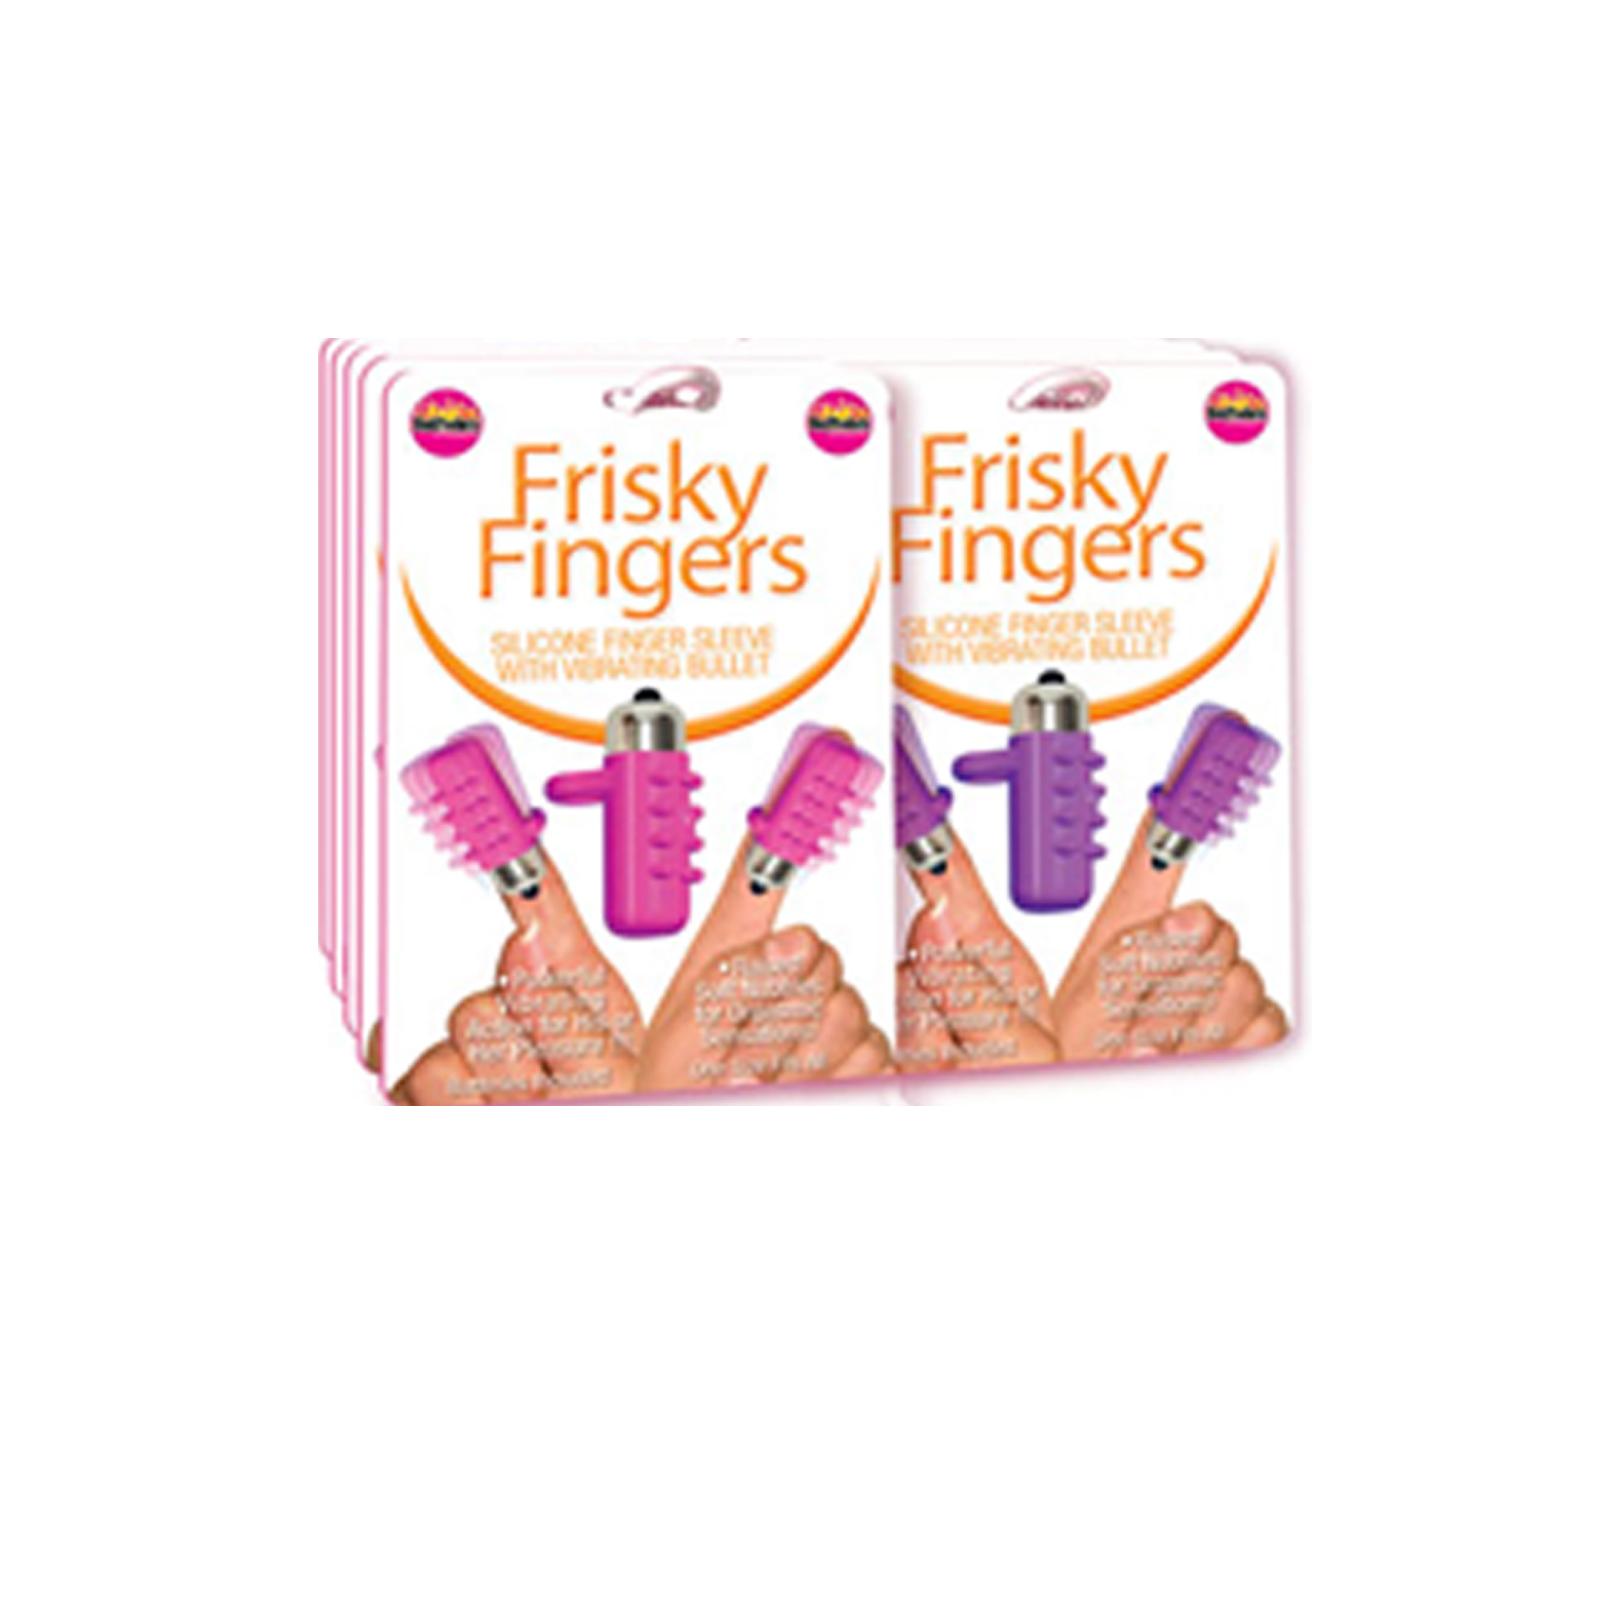 Hott Products Frisky Fingers Purple